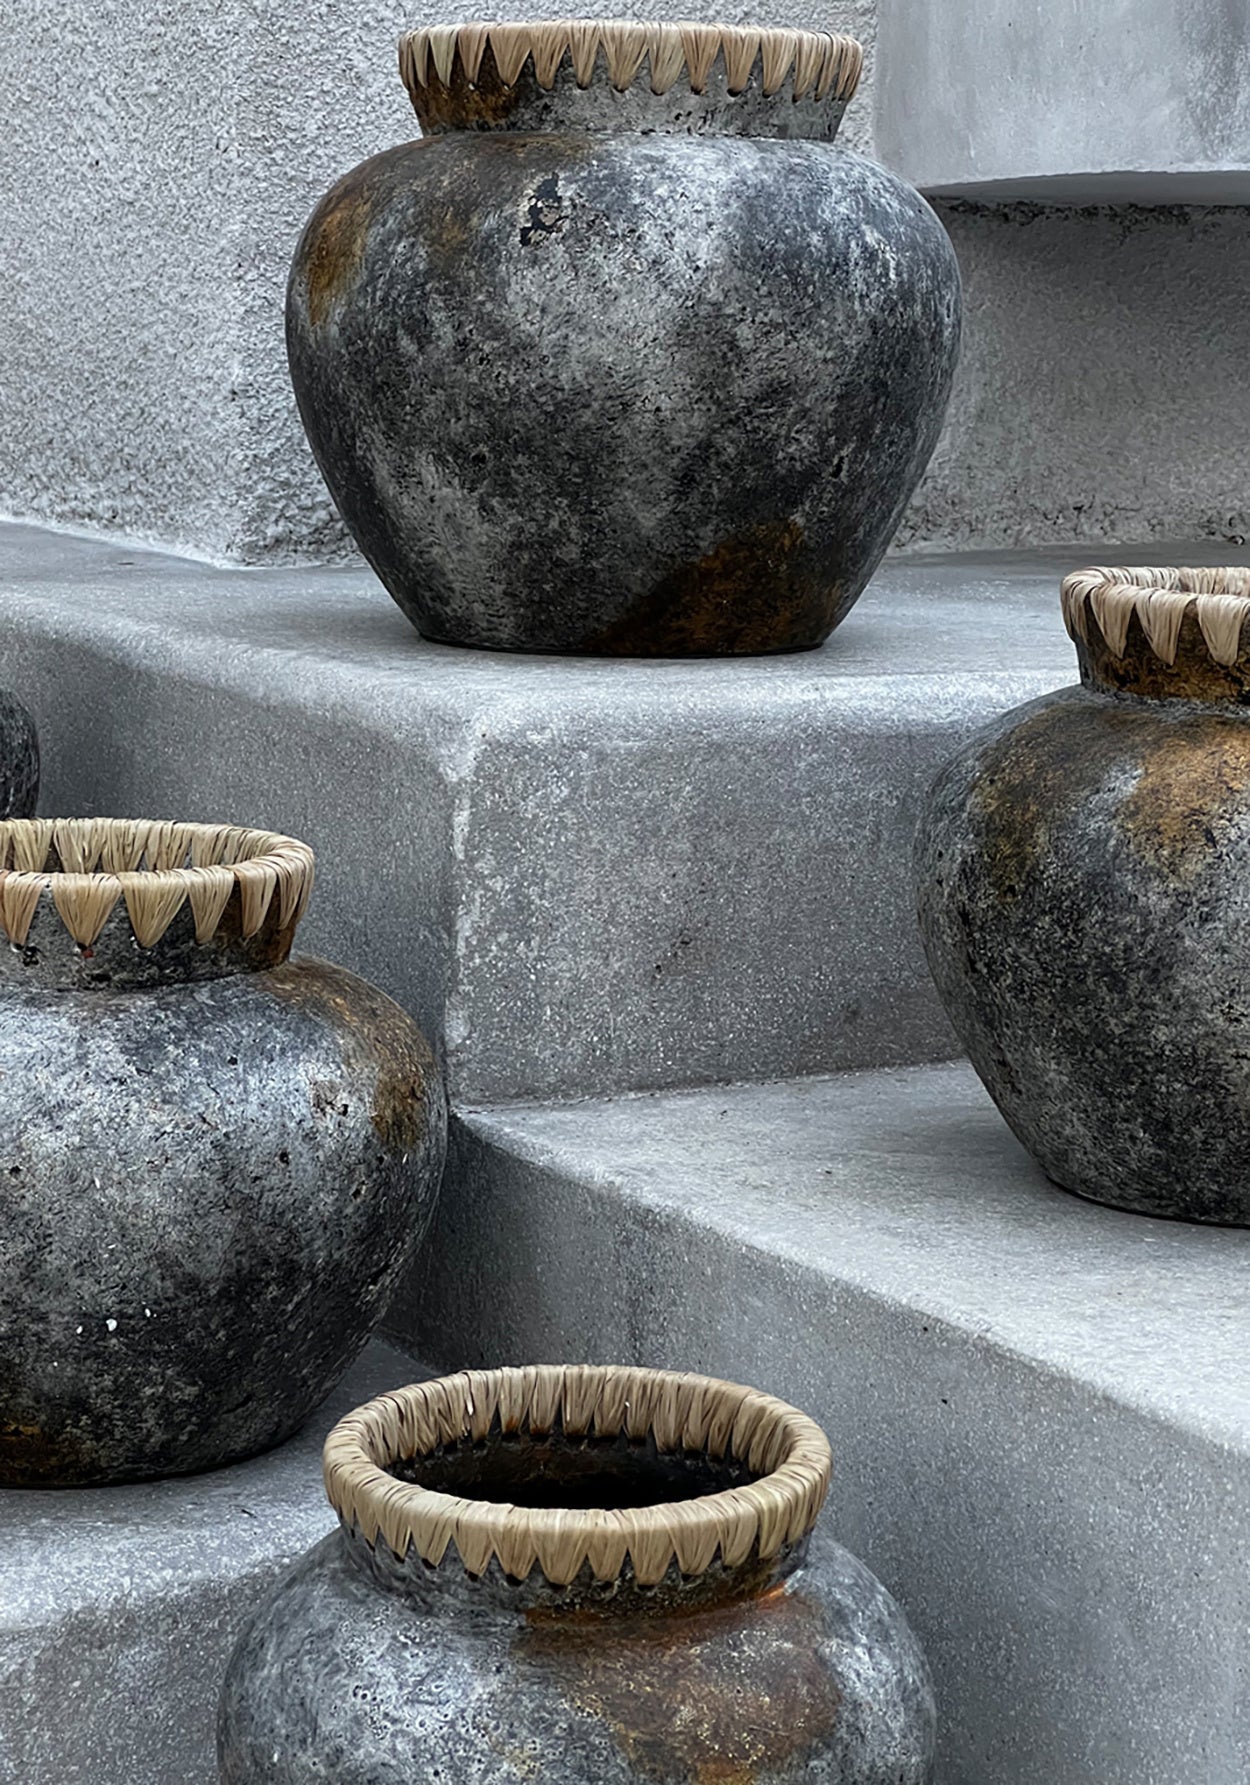 Vase antique gris - The Styly - MMaison Bloom Concept 